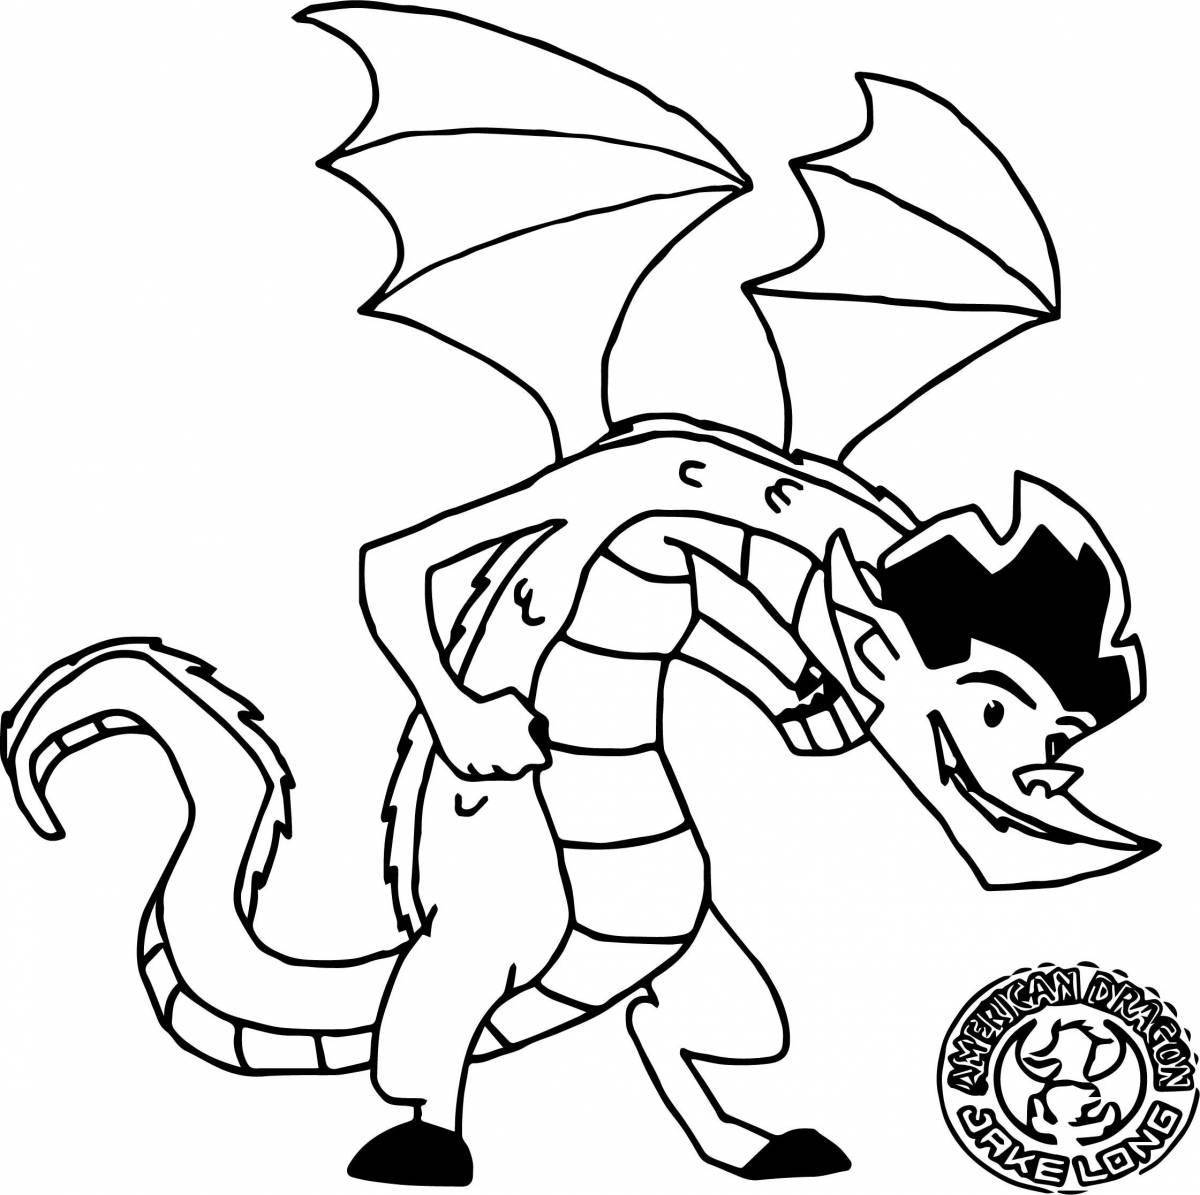 Rampant American Dragon coloring page